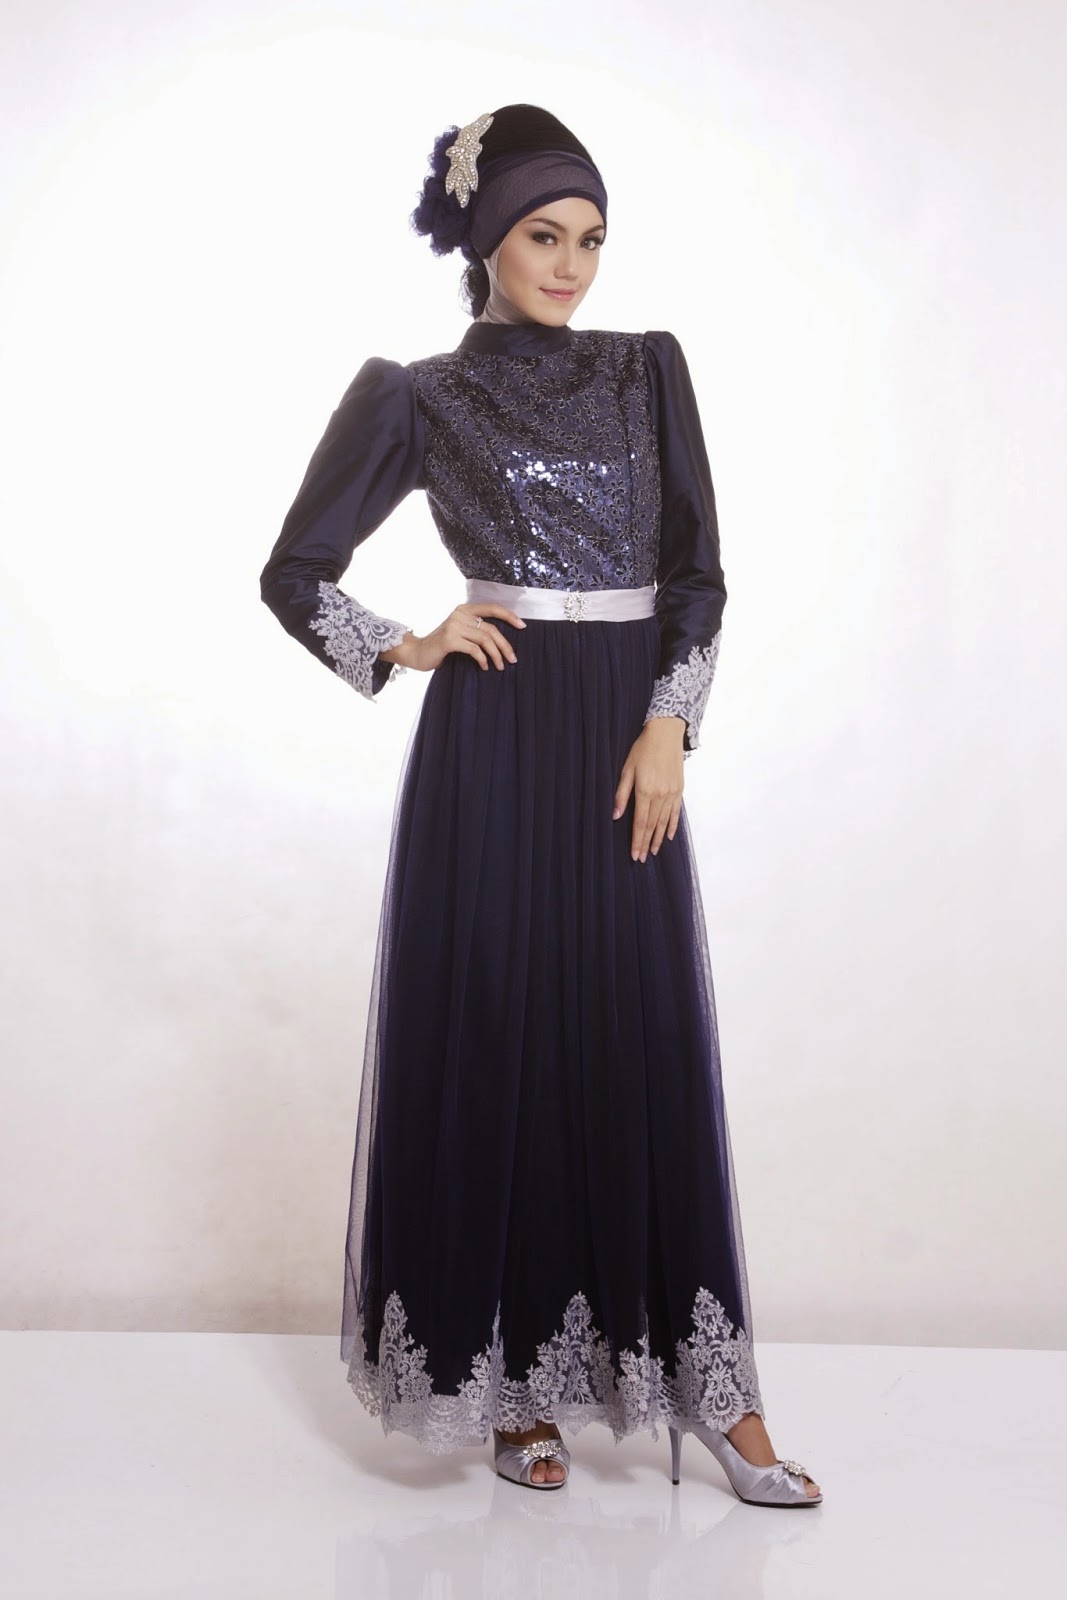  Model  gaun  pesta muslim  elegan  dan cantik terbaru  Gaya 